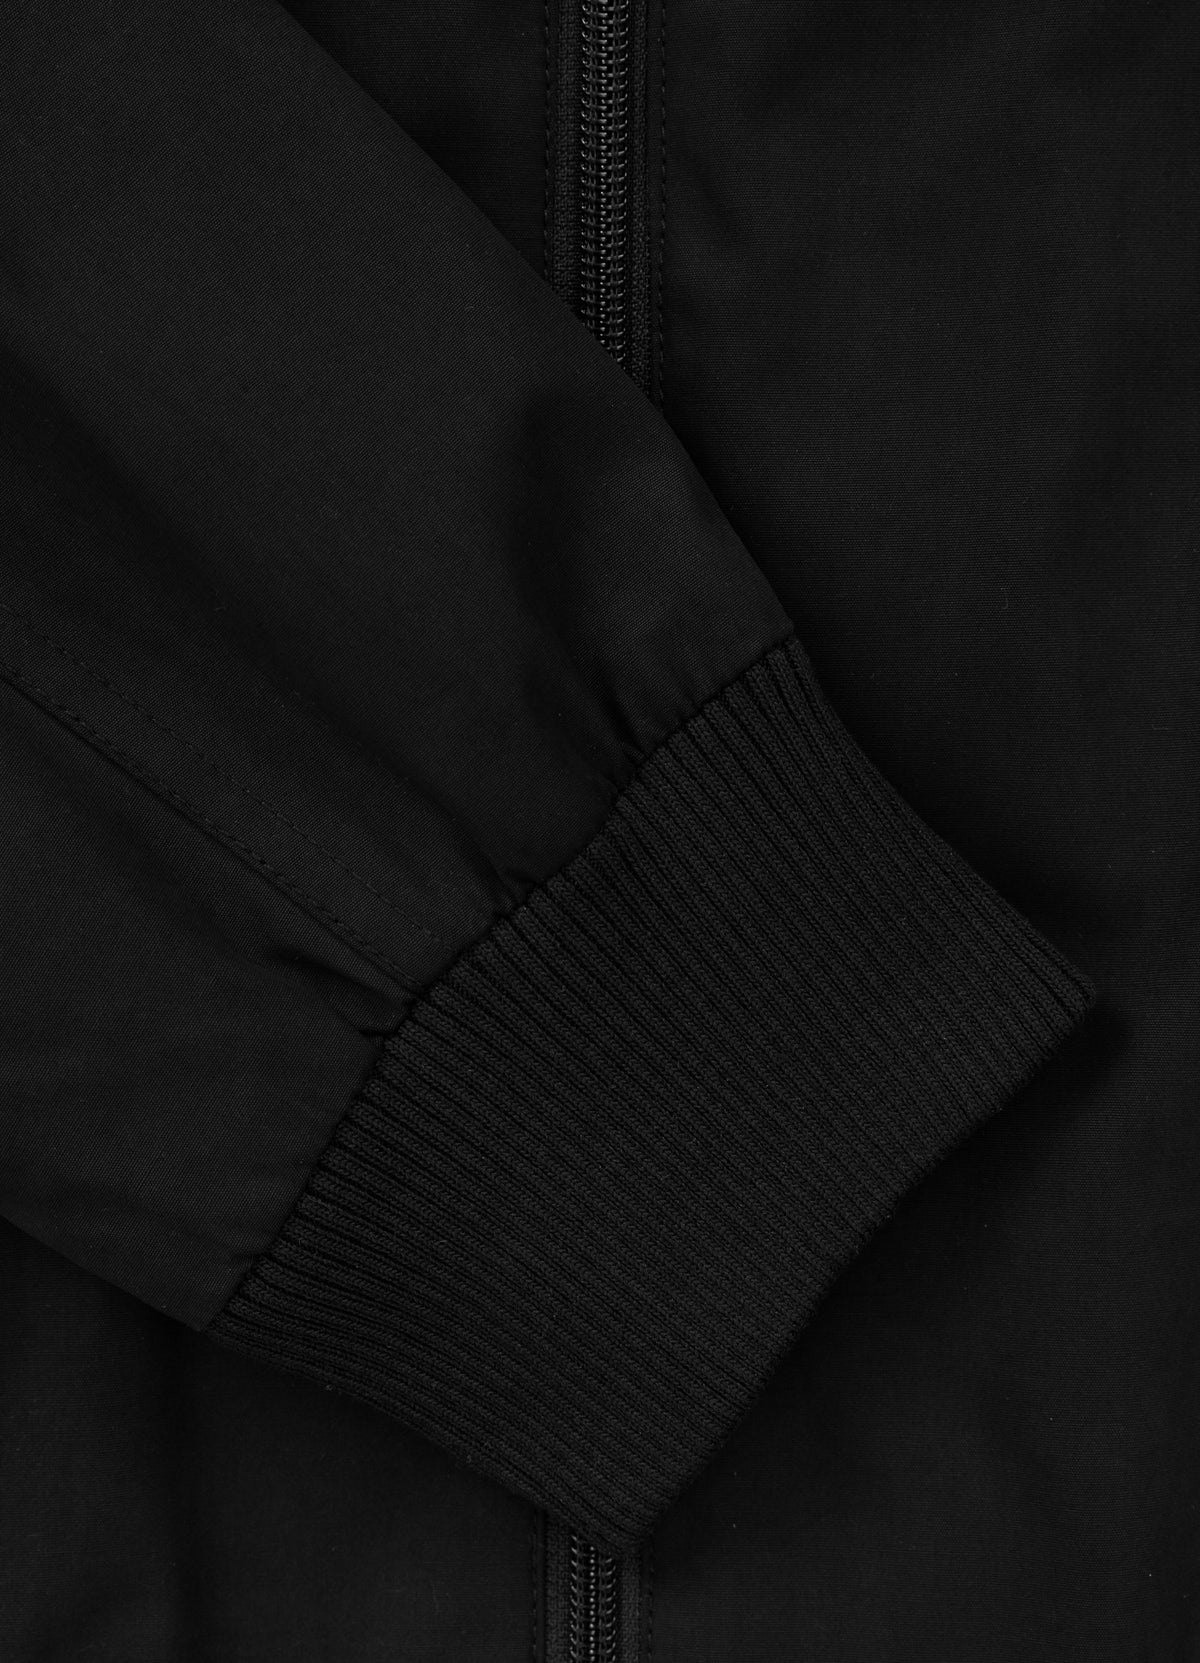 LONGWOOD Black Jacket